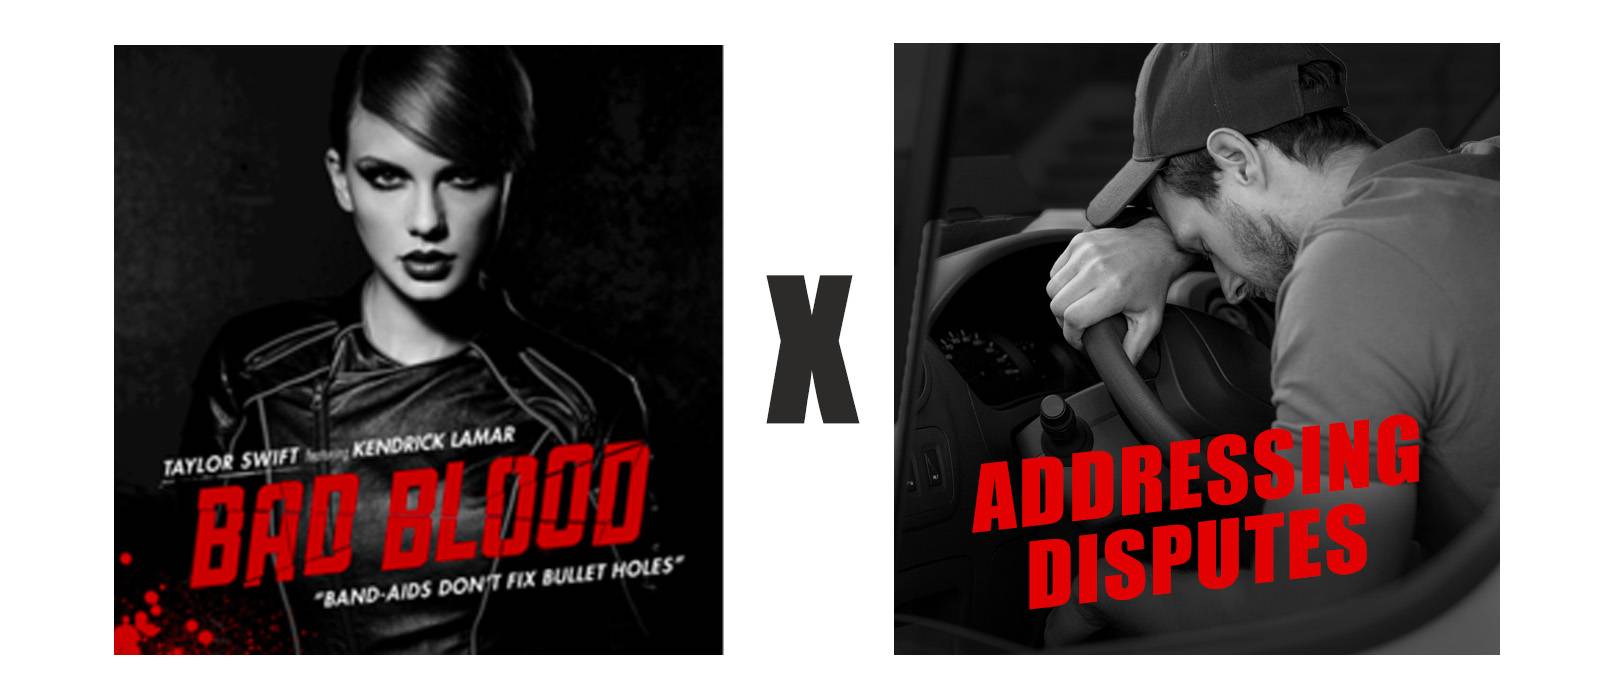 Taylor Swift Bad Blood x Addressing Disputes